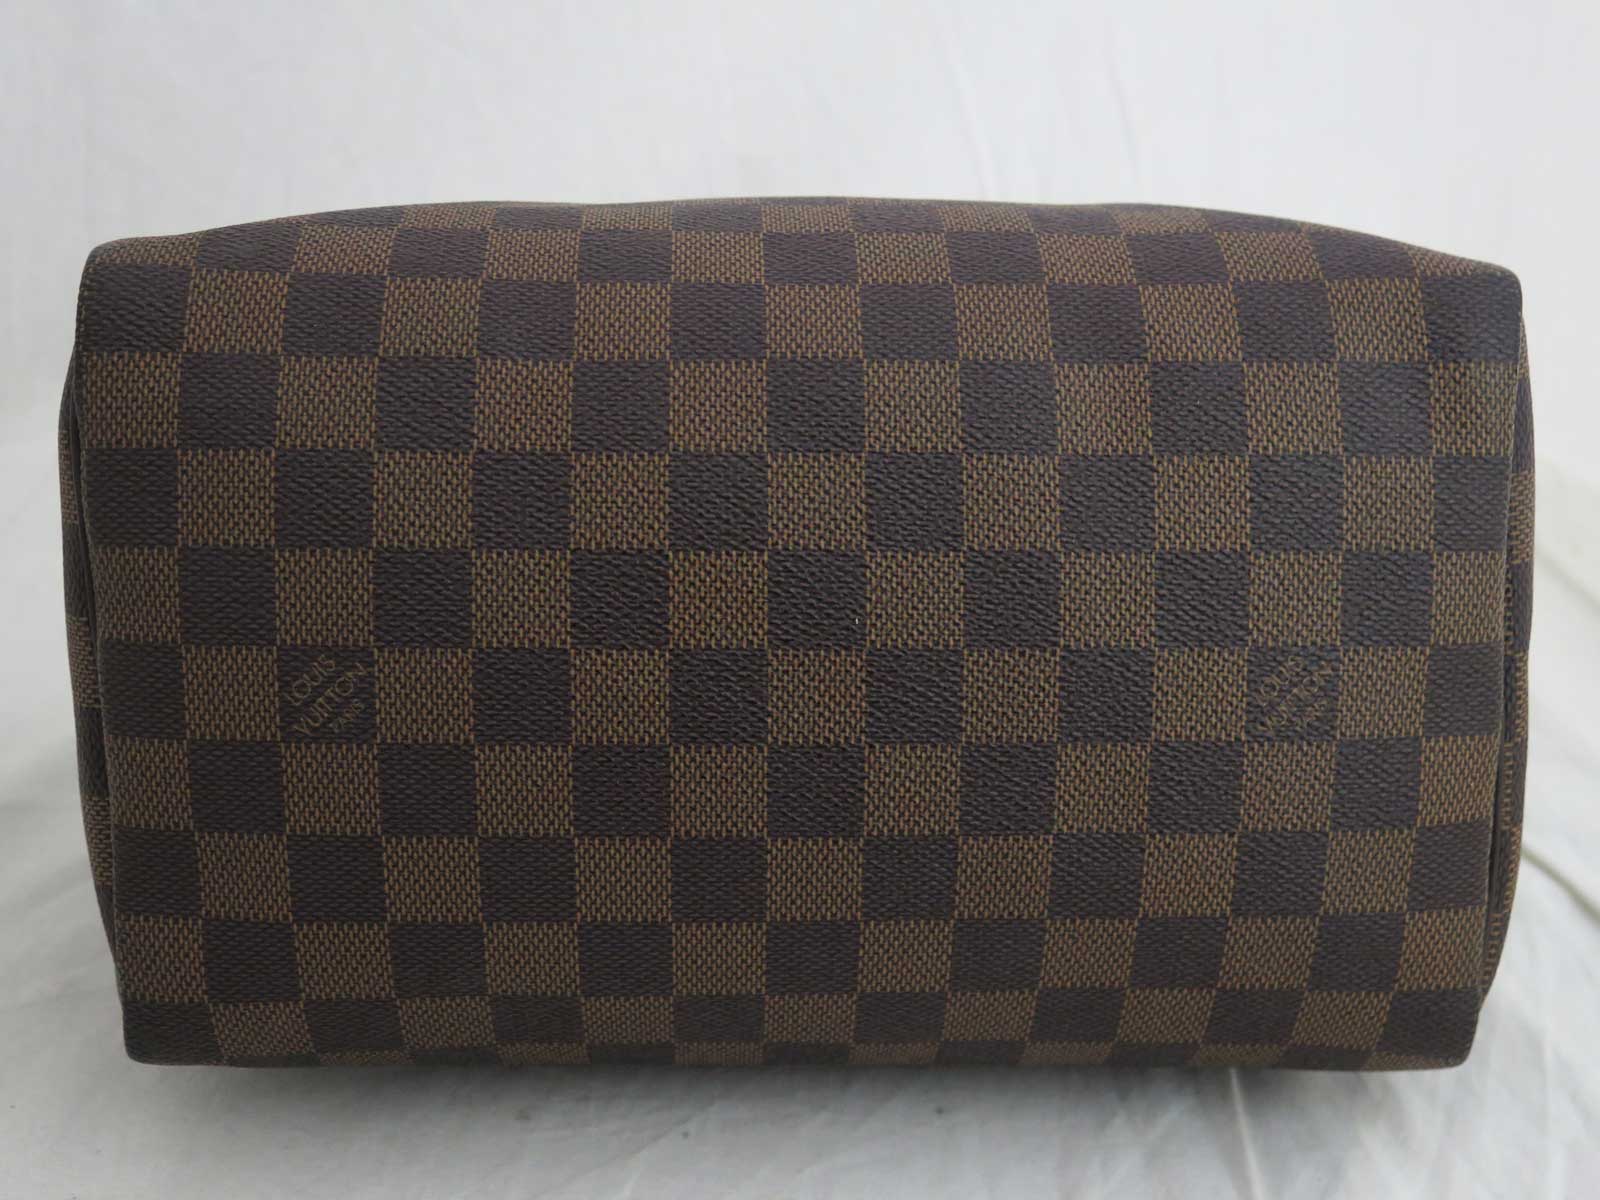 Auth Louis Vuitton Damier Speedy 25 Mini Boston Handbag Brown/Goldtone - e44791a | eBay